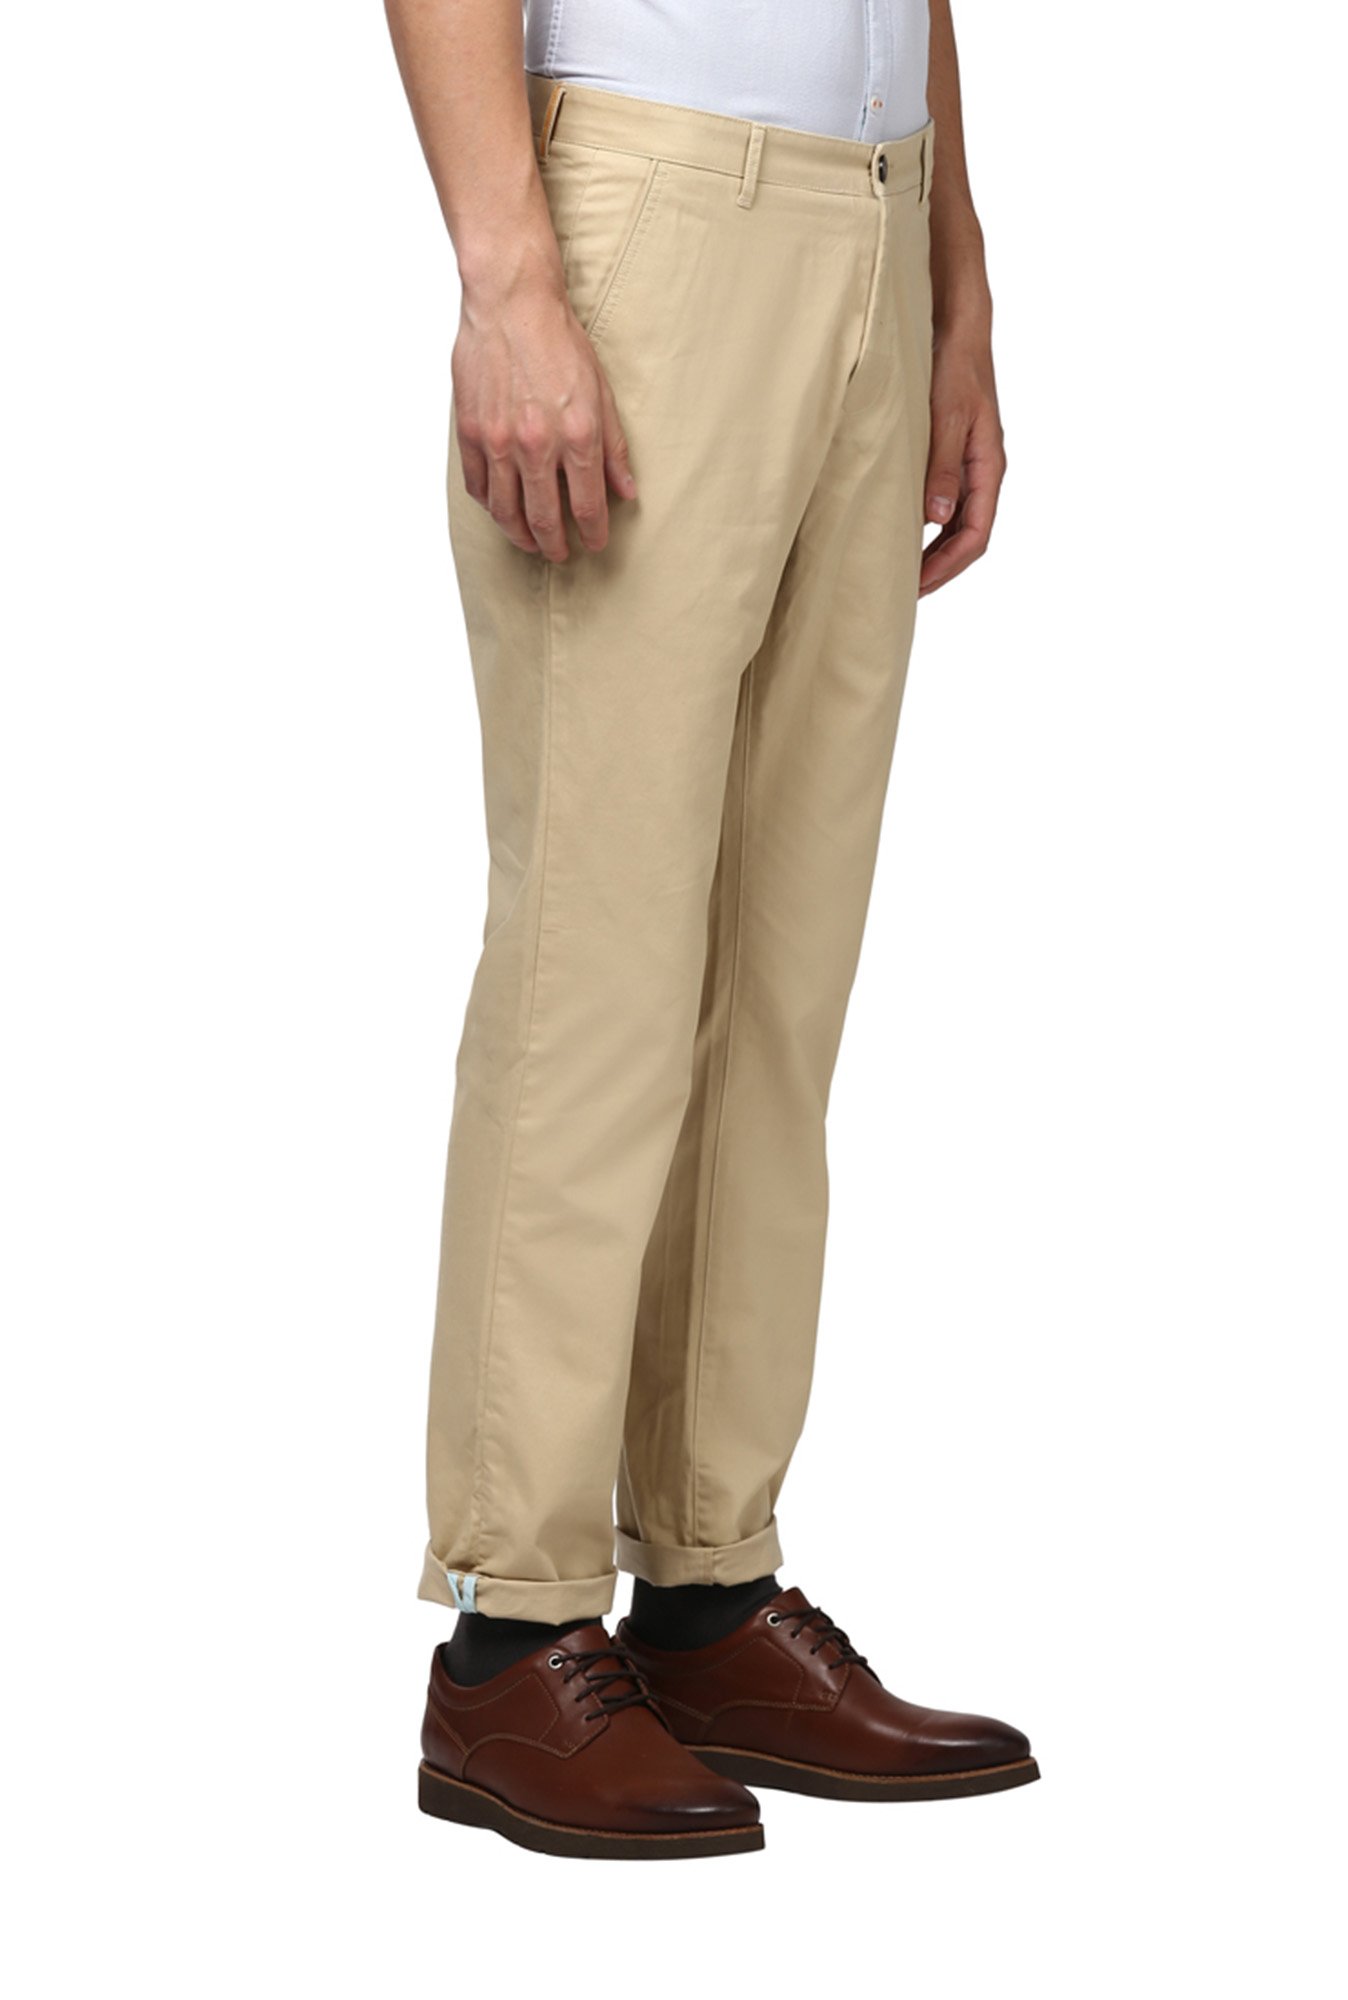 Buy Colorplus Colorplus Men Dark Grey Checks Regular Fit Work Trouser  Colorplus  Trouser online  Dark Grey